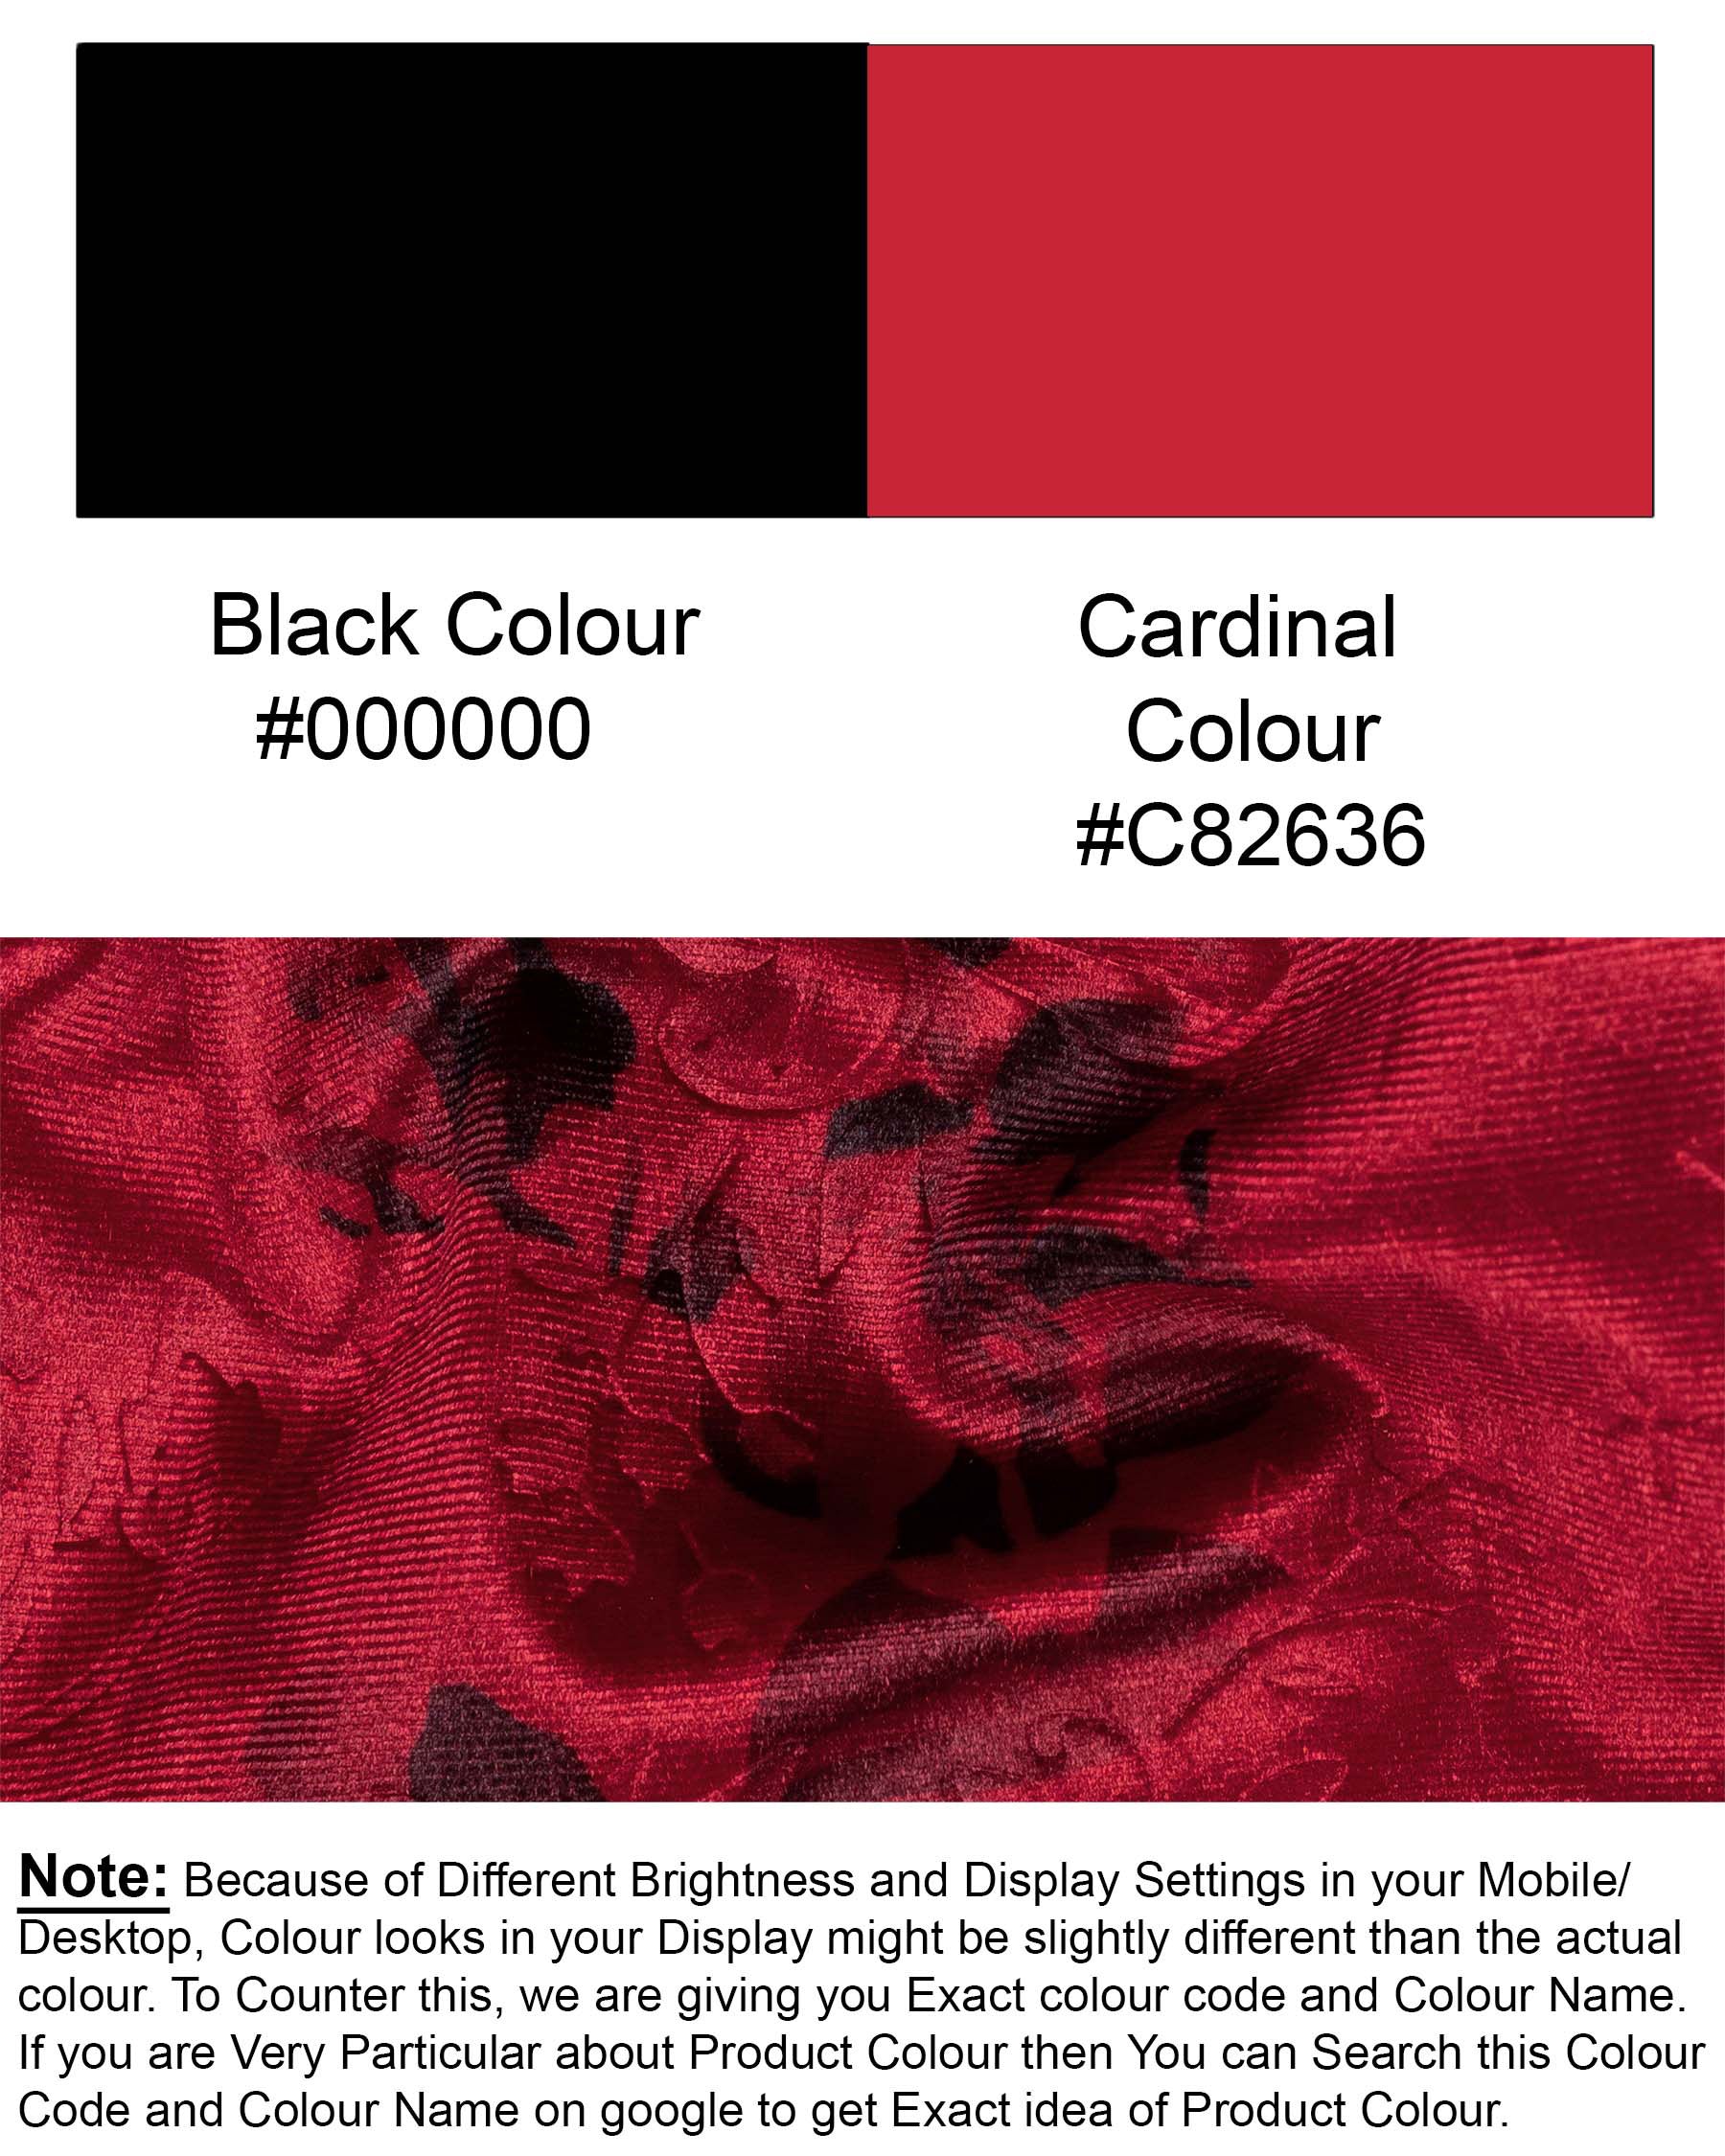 Cardinal Red Floral Textured Designer Tuxedo Blazer BL1767-BKL-36,BL1767-BKL-38,BL1767-BKL-40,BL1767-BKL-42,BL1767-BKL-44,BL1767-BKL-46,BL1767-BKL-48,BL1767-BKL-50,BL1767-BKL-52,BL1767-BKL-54,BL1767-BKL-56,BL1767-BKL-58,BL1767-BKL-60